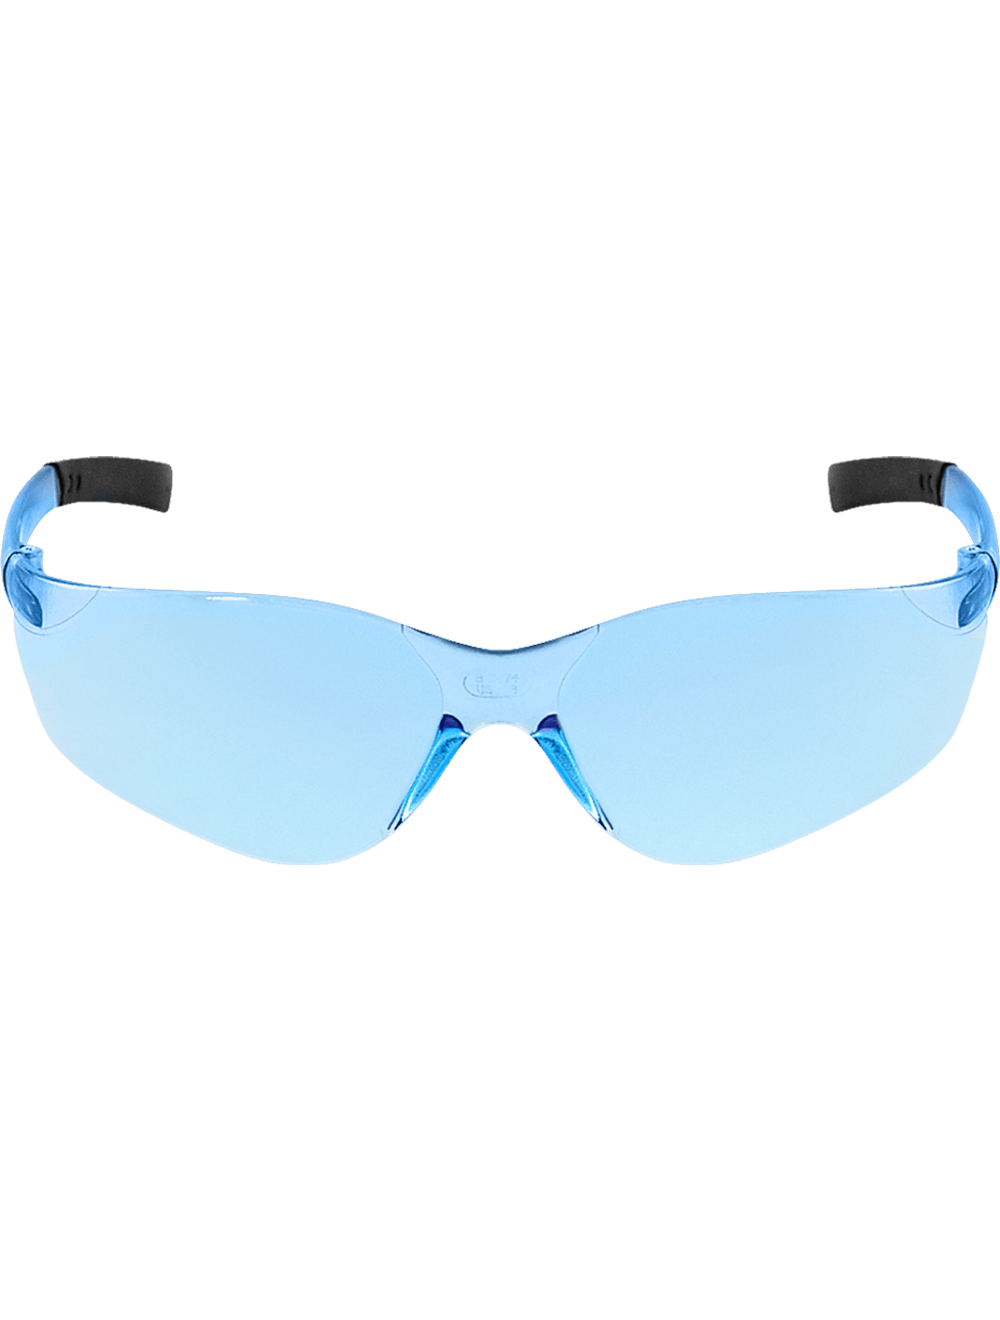 Pavon® Light Blue Lens, Frosted Blue Frame Safety Glasses - BH525 ...